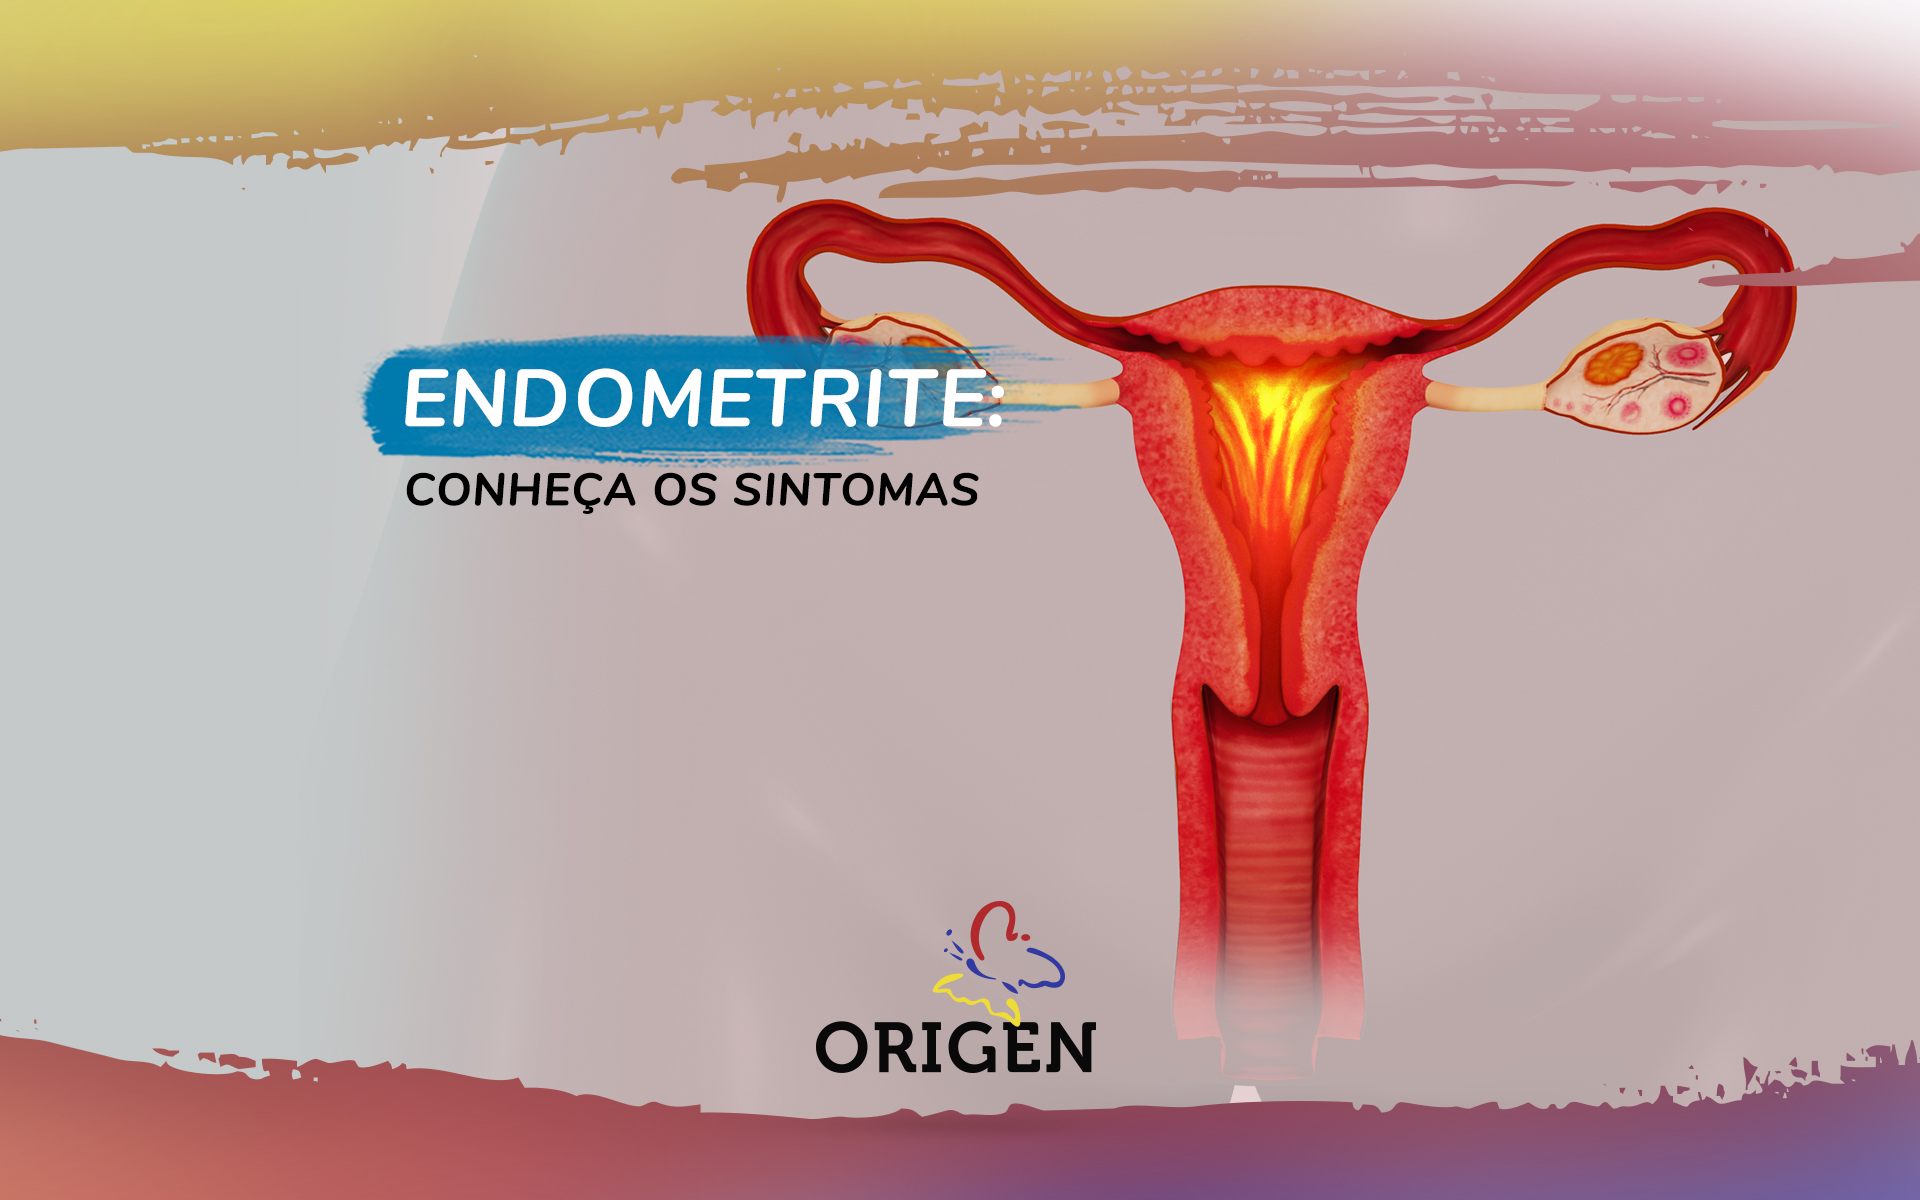 Endometrite: conheça os sintomas